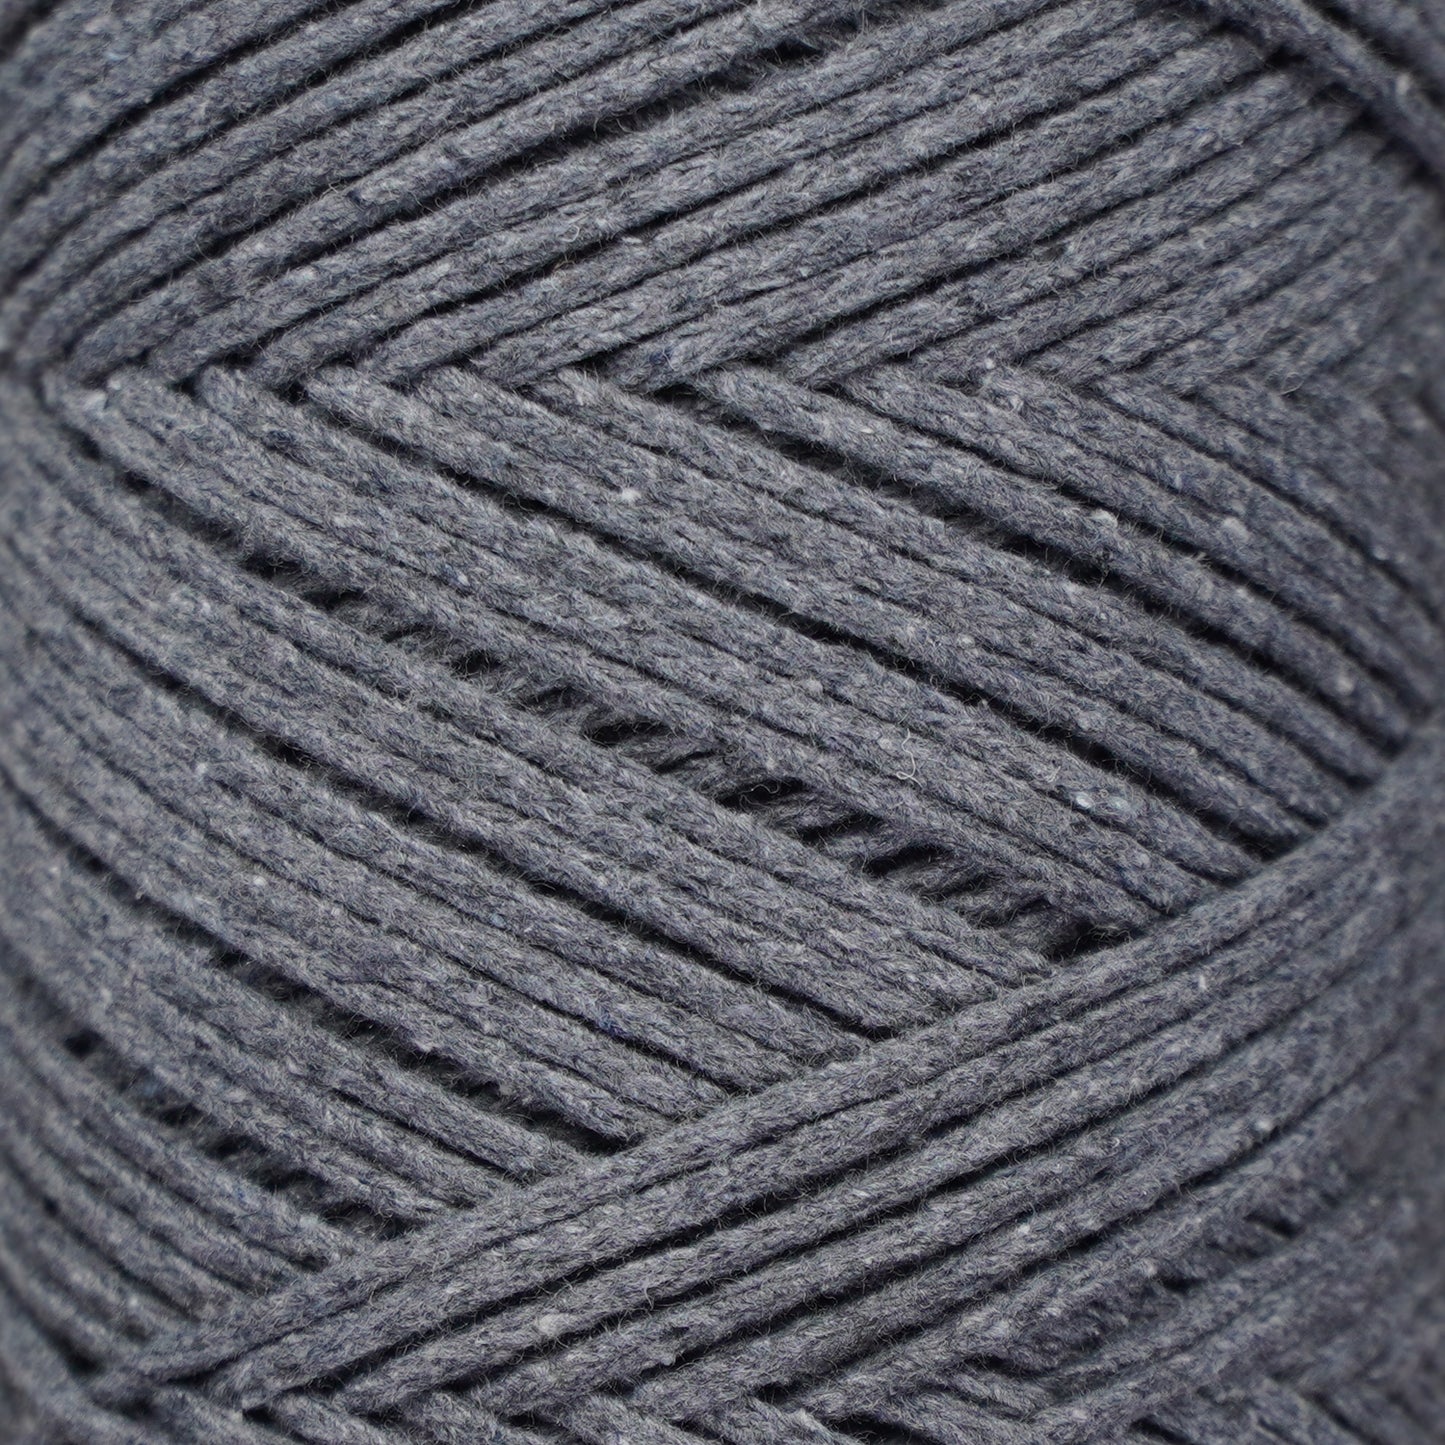 Cotton Macrame Cord 2mm x 195 Yards (590 feet) 2mm - Dark Grey